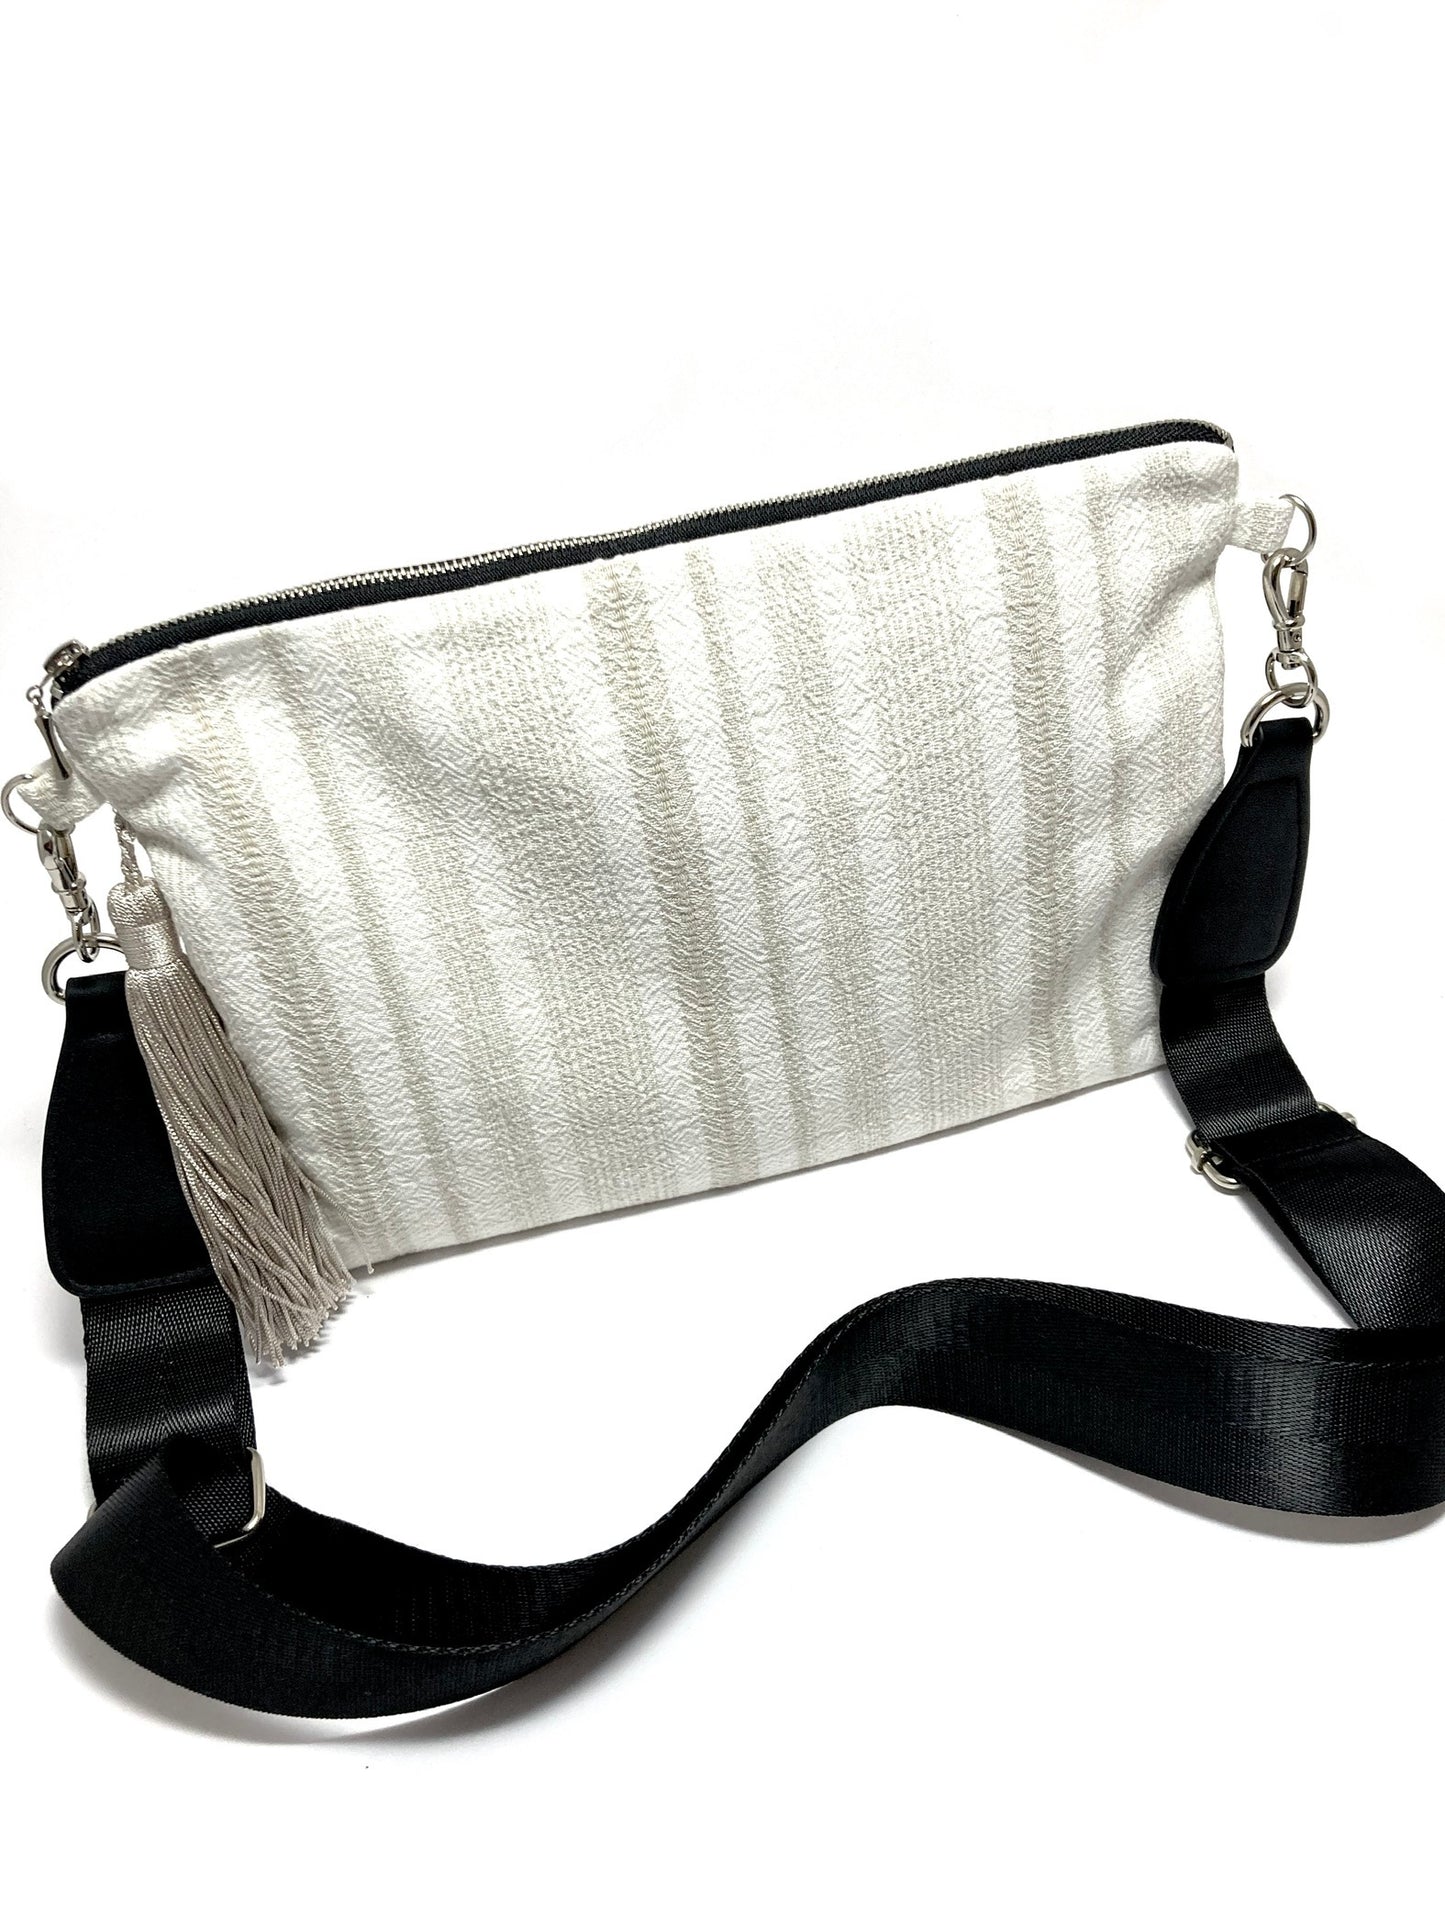 Linen bag with tassel